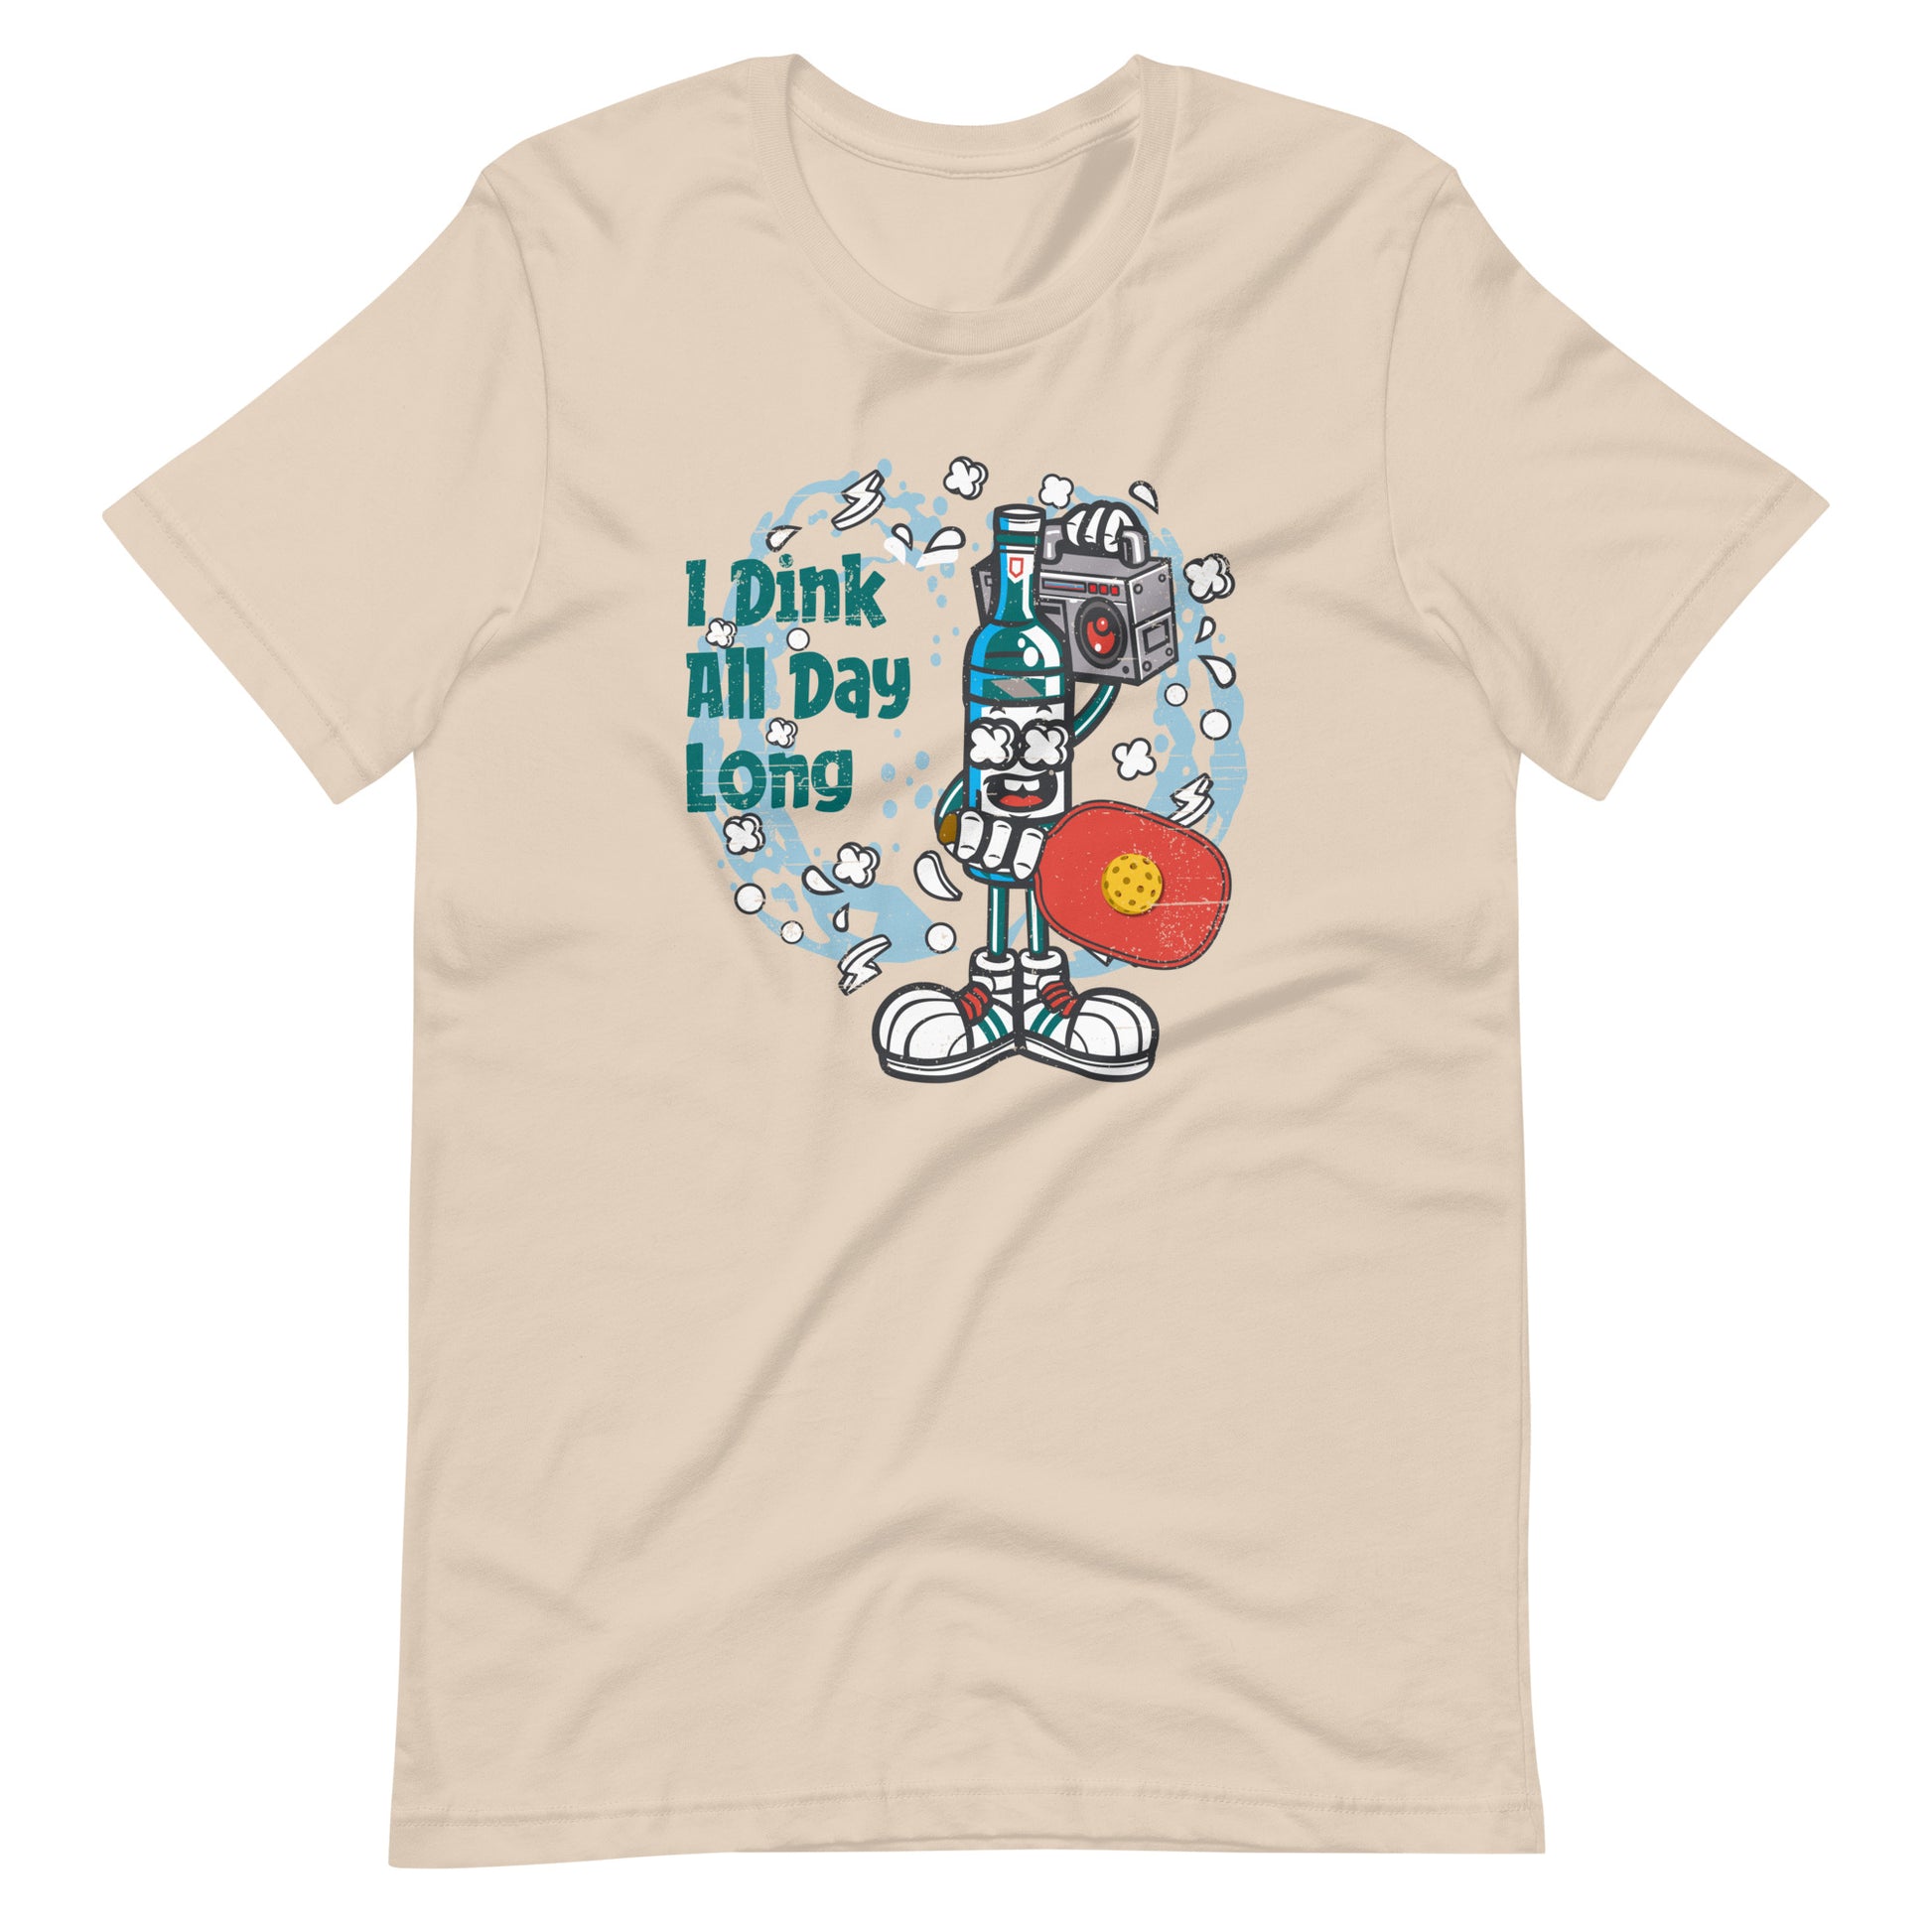 Retro-Vintage Fun Pickleball "I Dink All Day Long" Unisex Women's T-Shirt